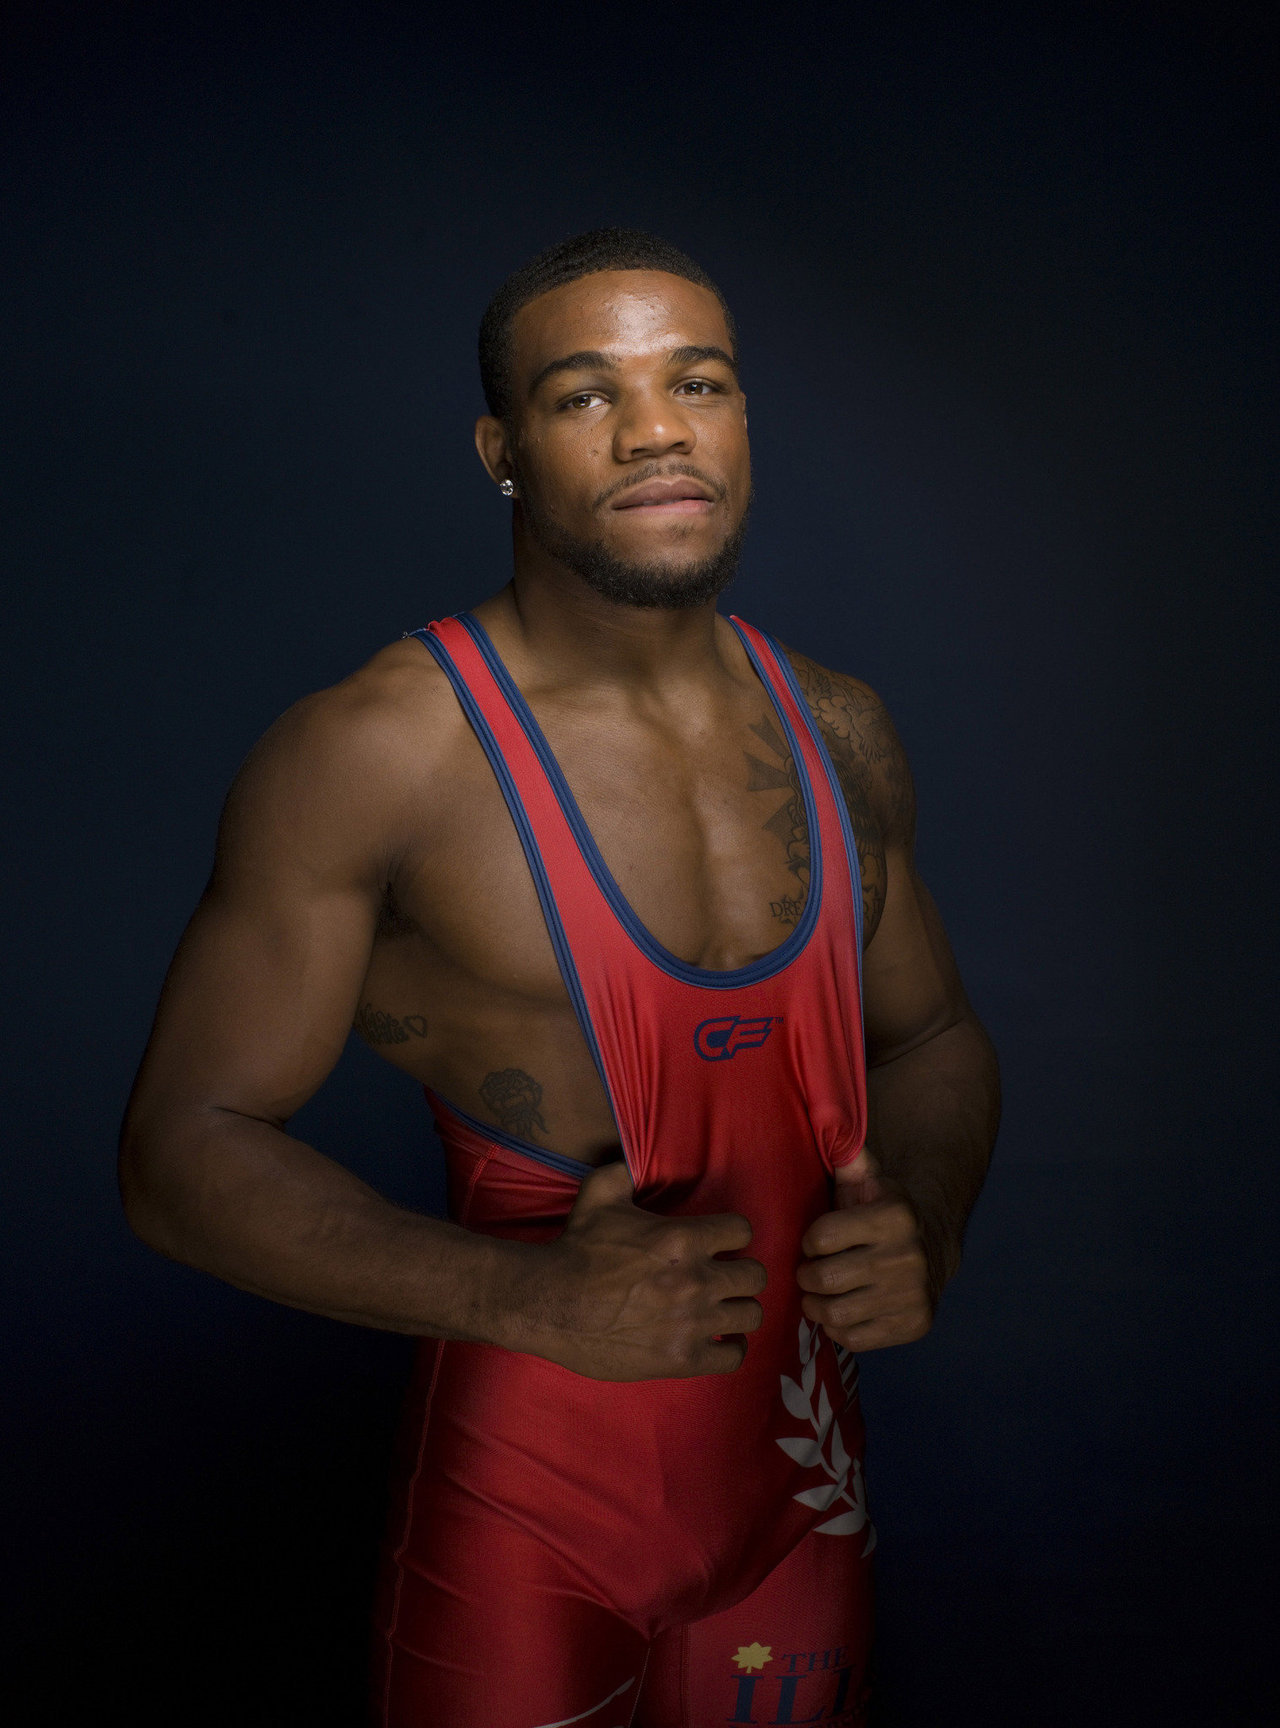 2012 USA wrestler Jordan Burroughs